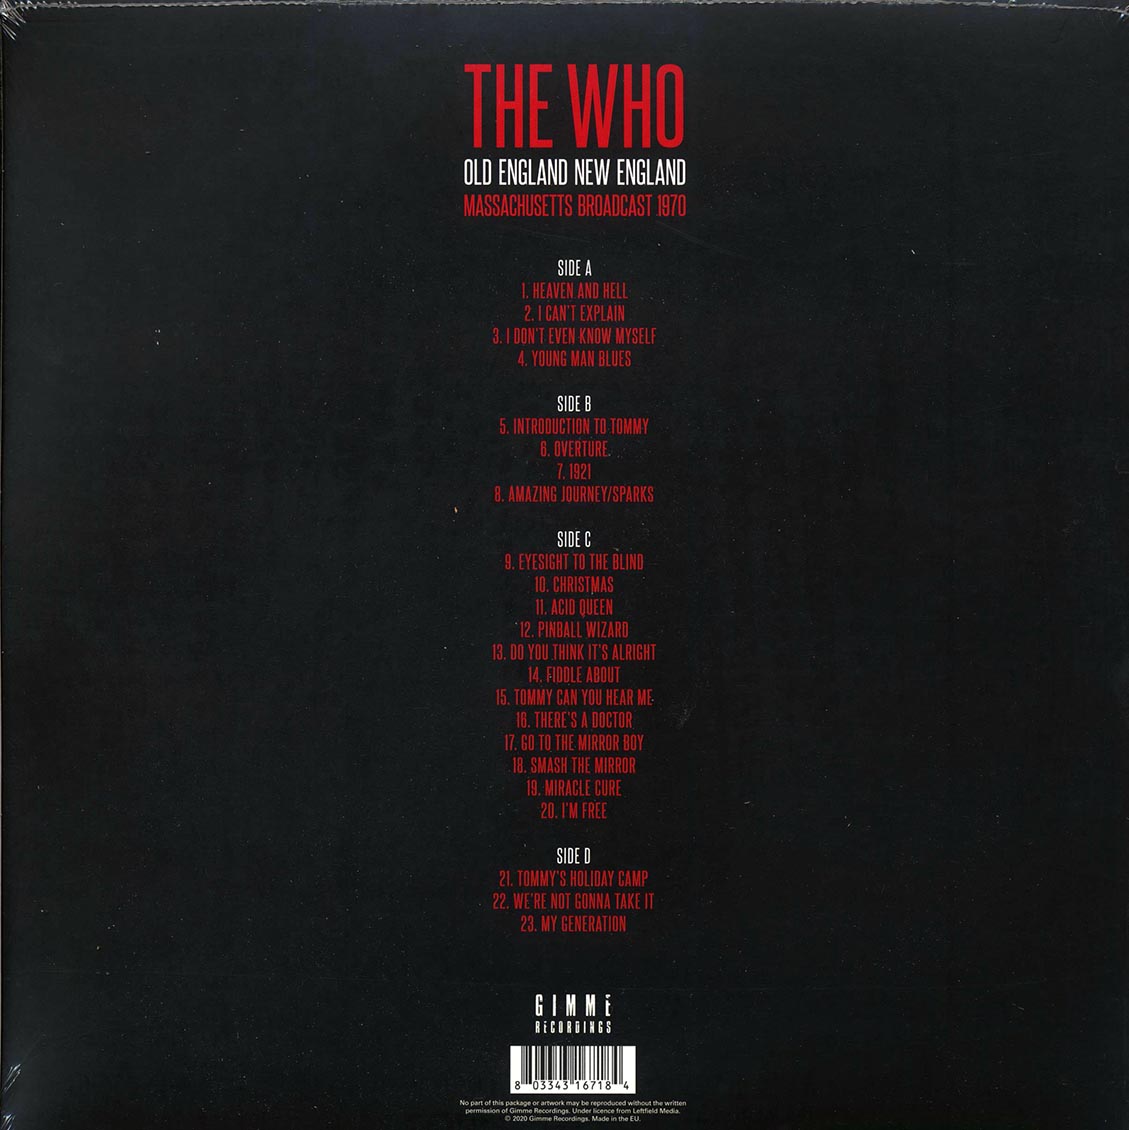 The Who - Old England New England: Massachusettes Broadcast 1970 (2xLP) - Vinyl LP, LP